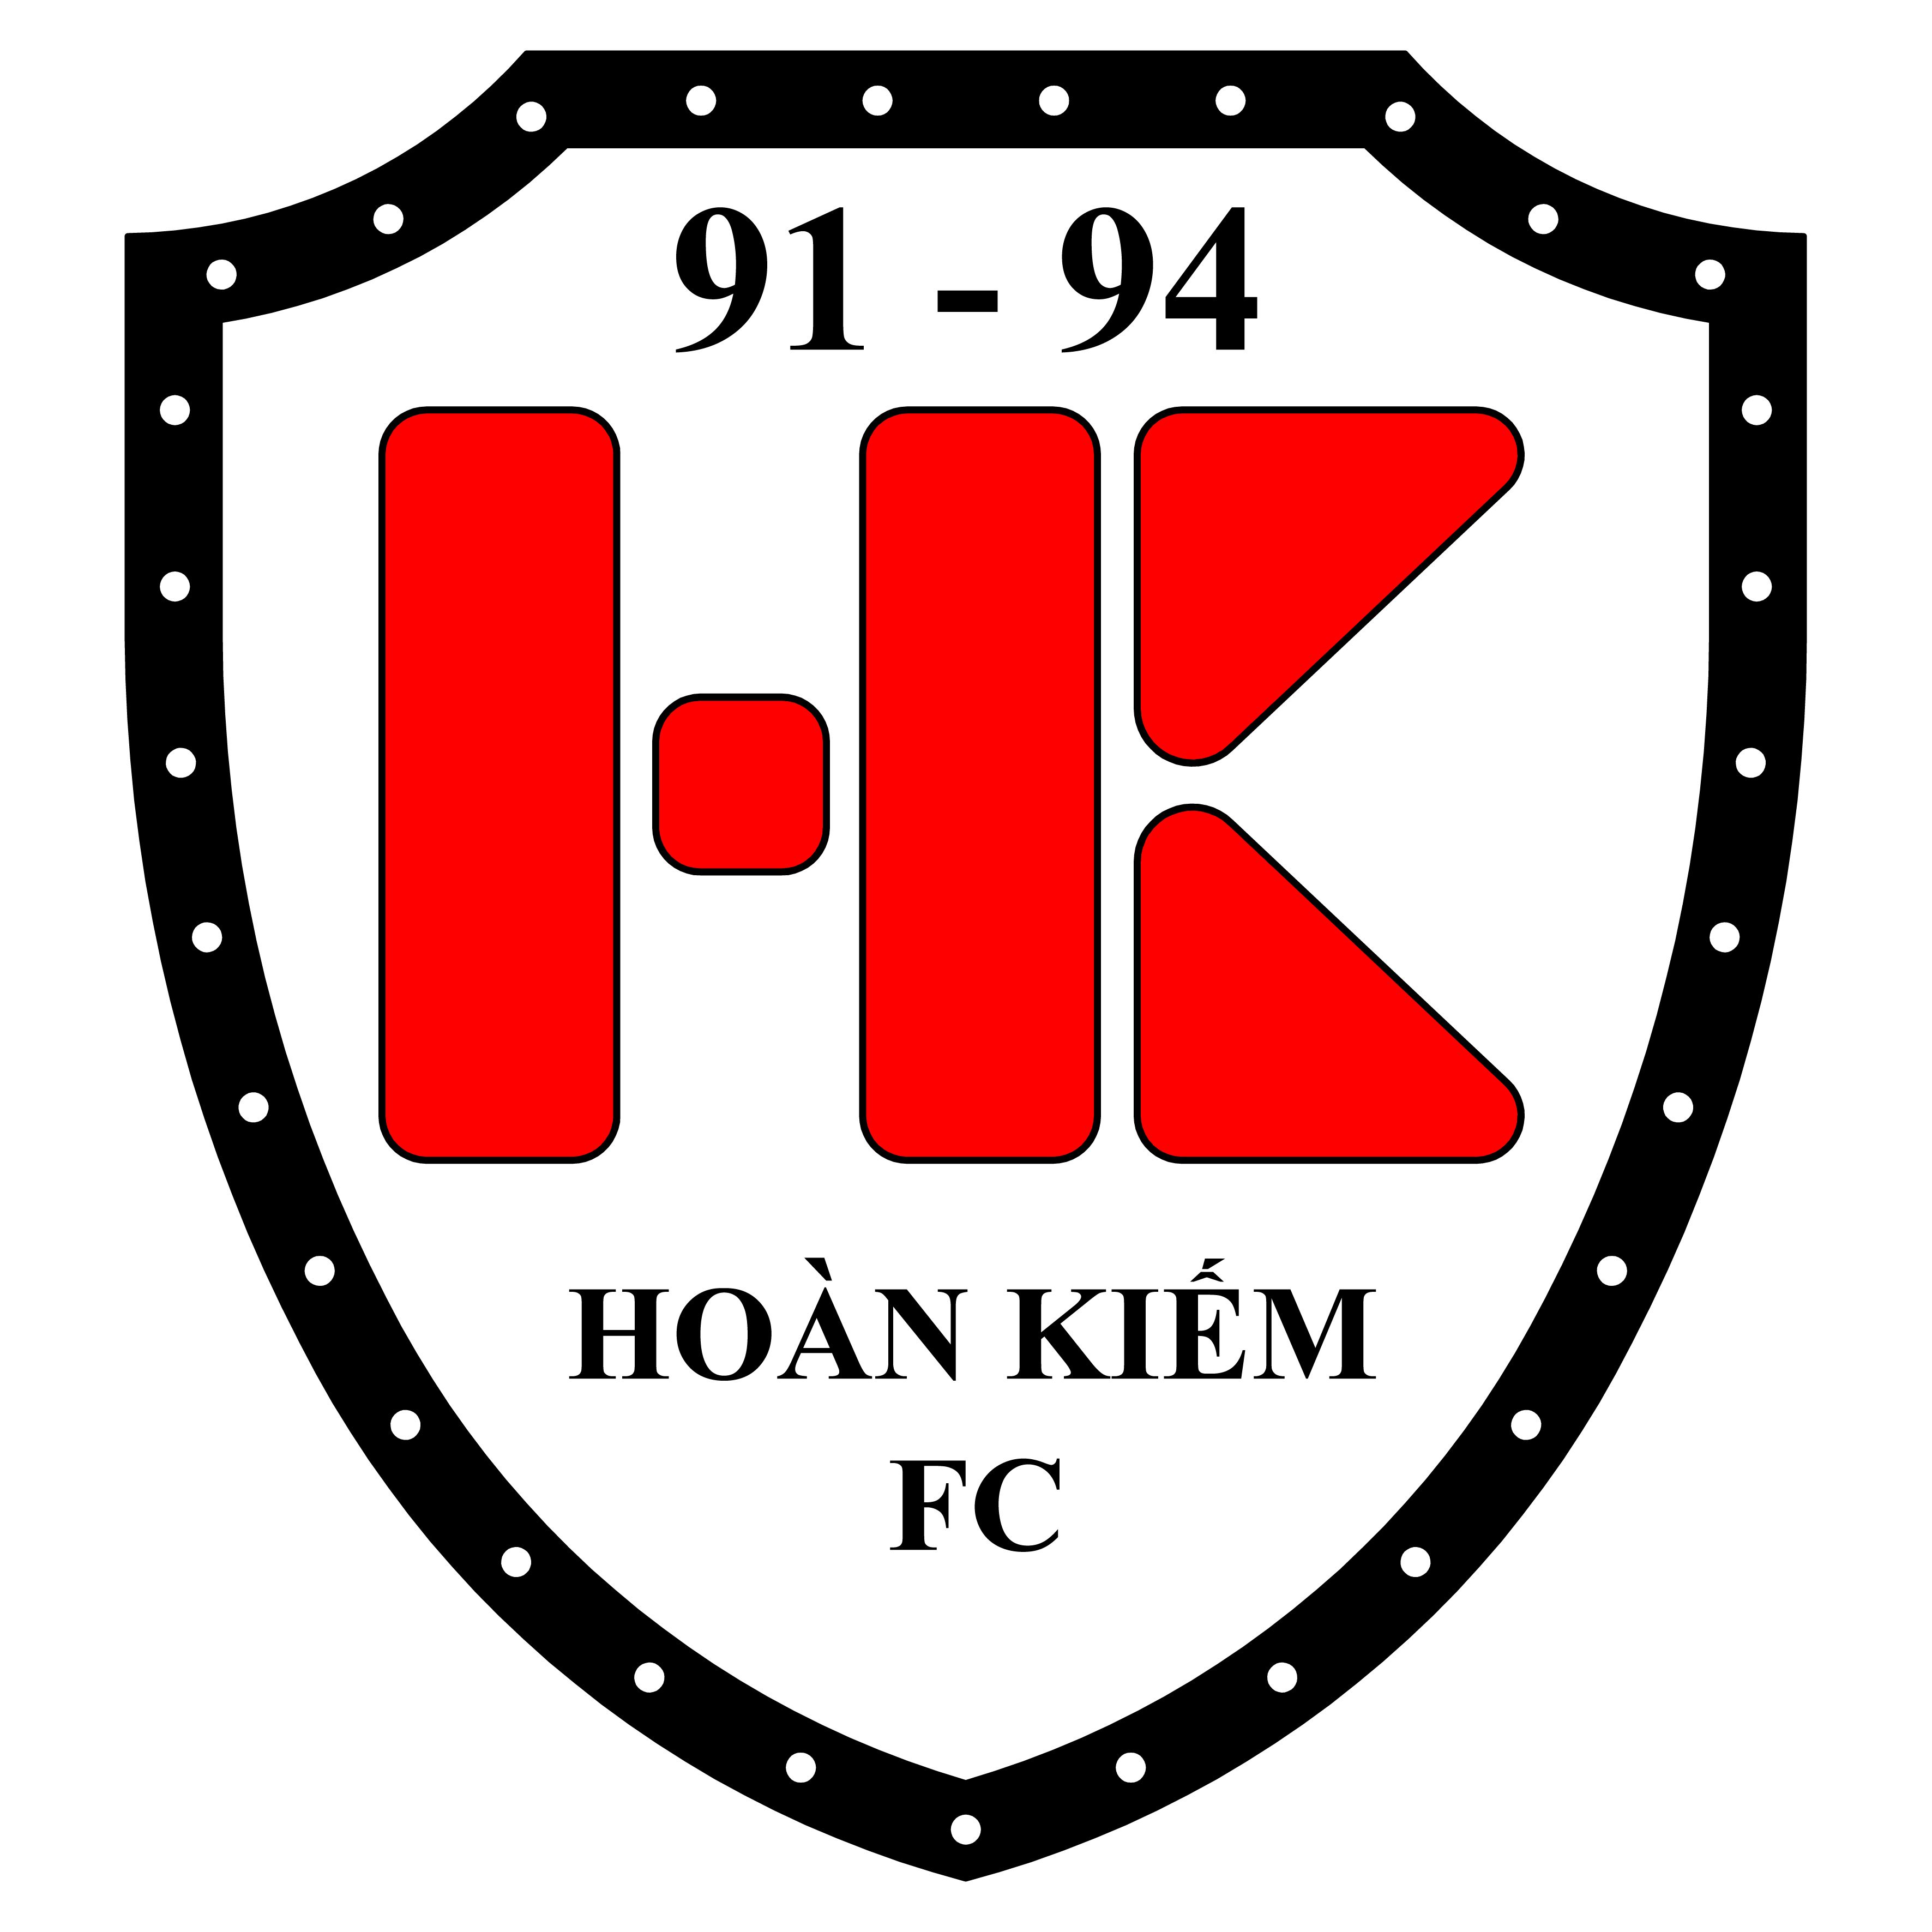 FC Hoàn Kiếm 9194